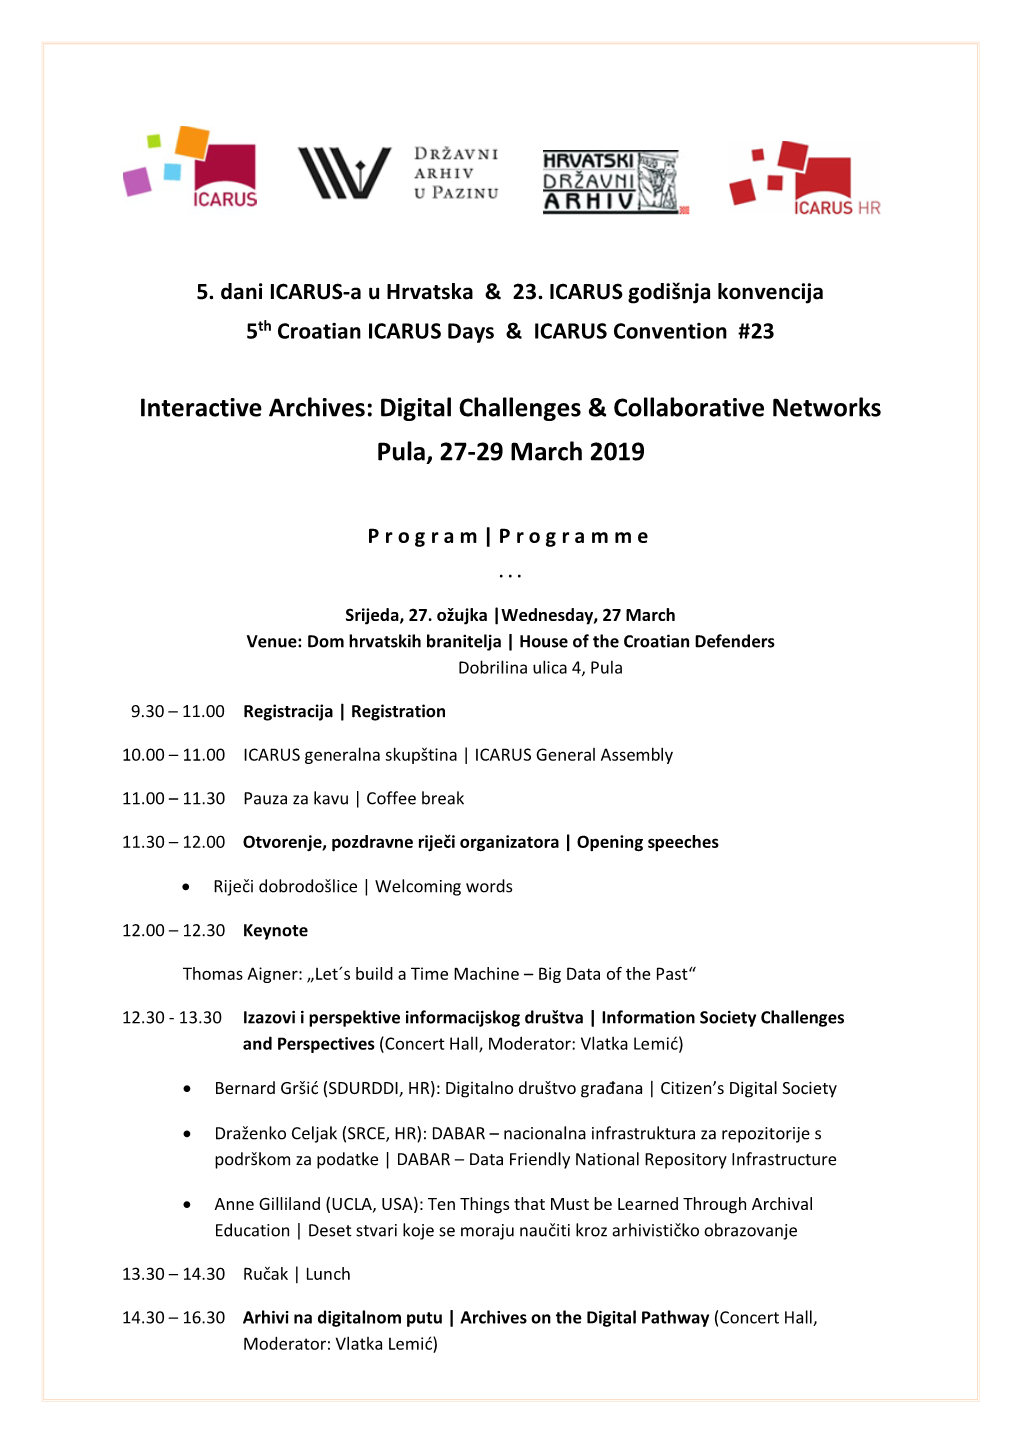 Digital Challenges & Collaborative Networks